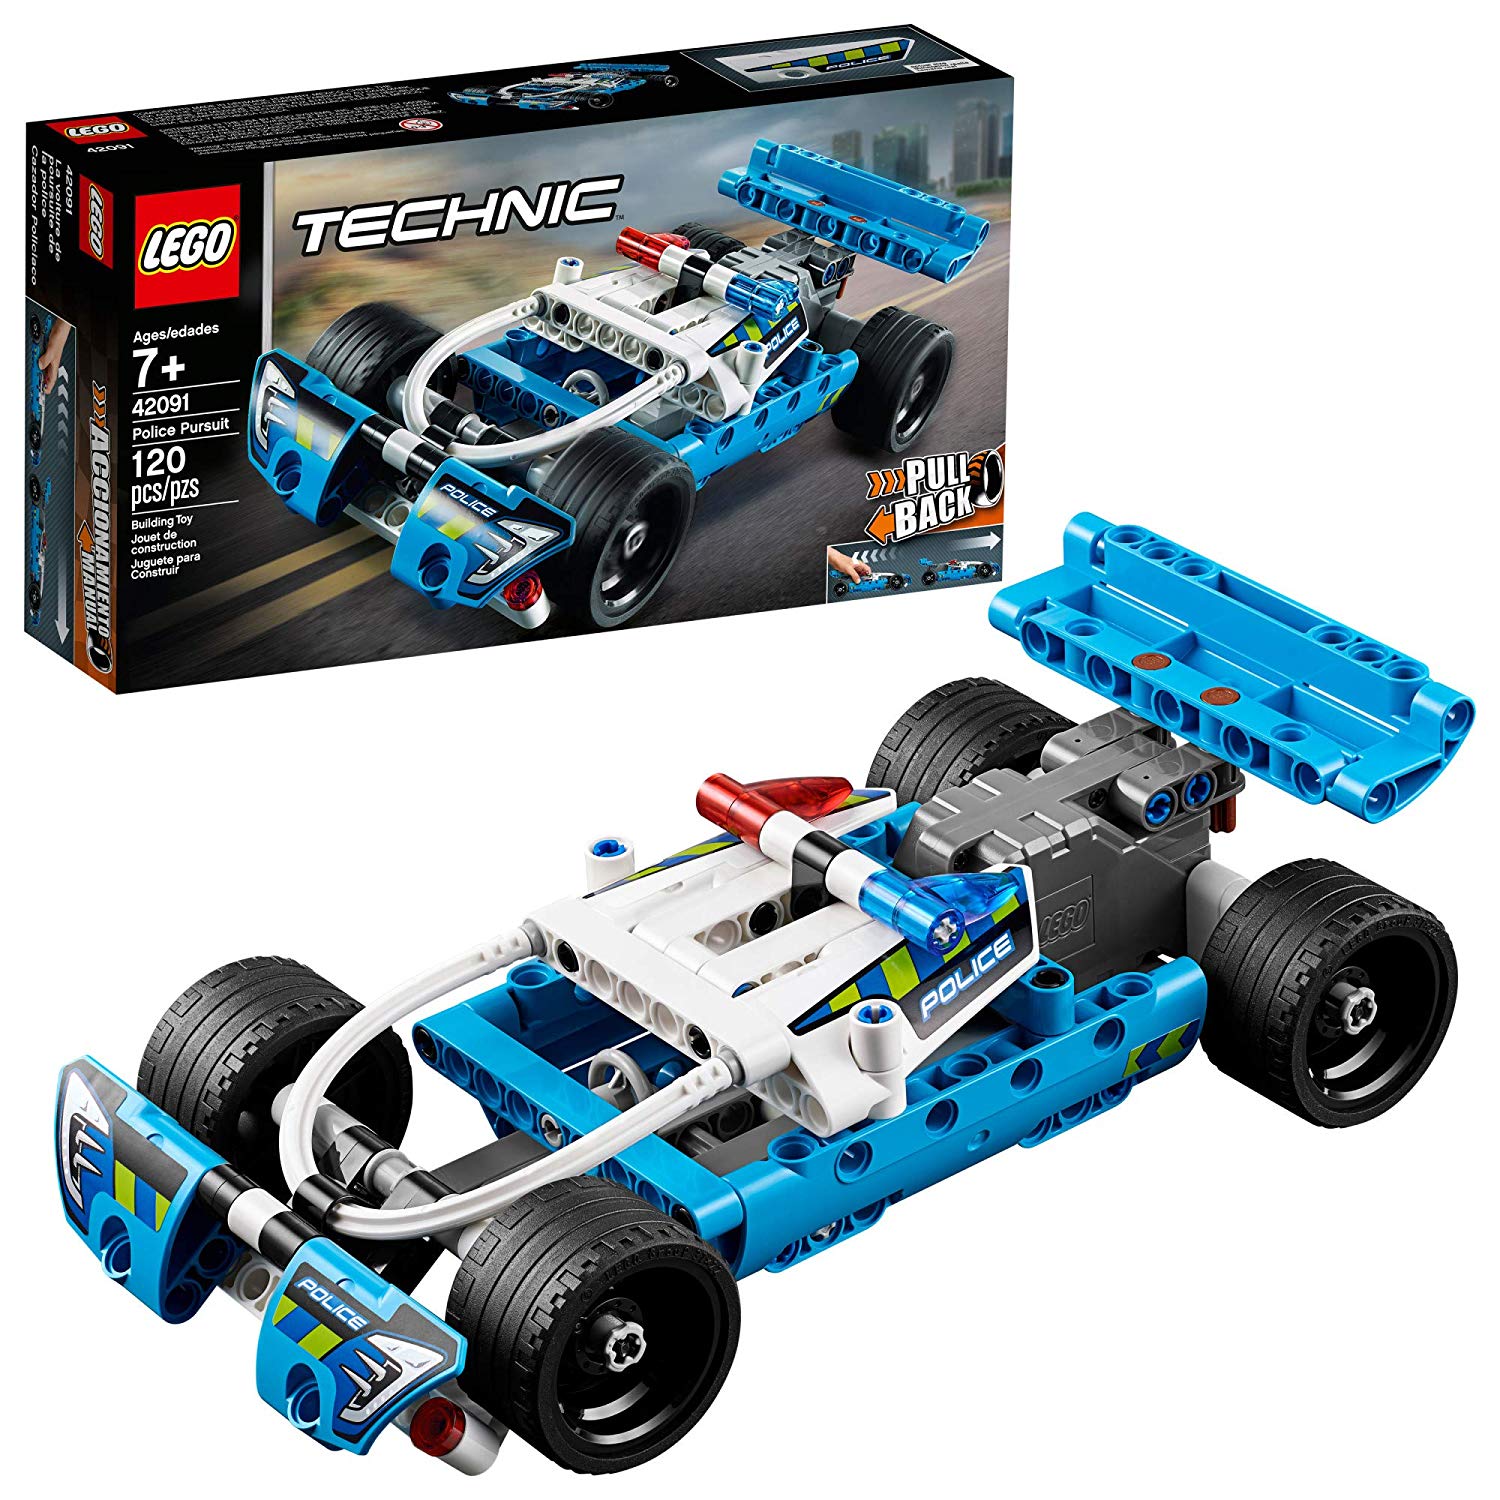 Technic Lego 42091 Police Pursuit Car Kit New 2019 (120 Pieces)